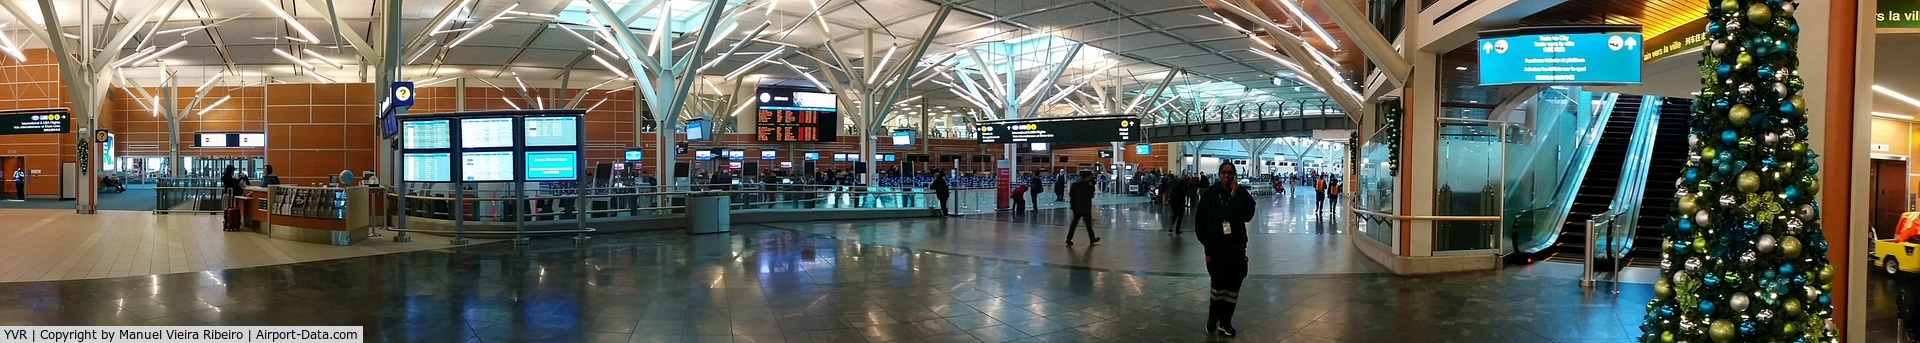 Vancouver International Airport, Vancouver, British Columbia Canada (YVR) - Departure area